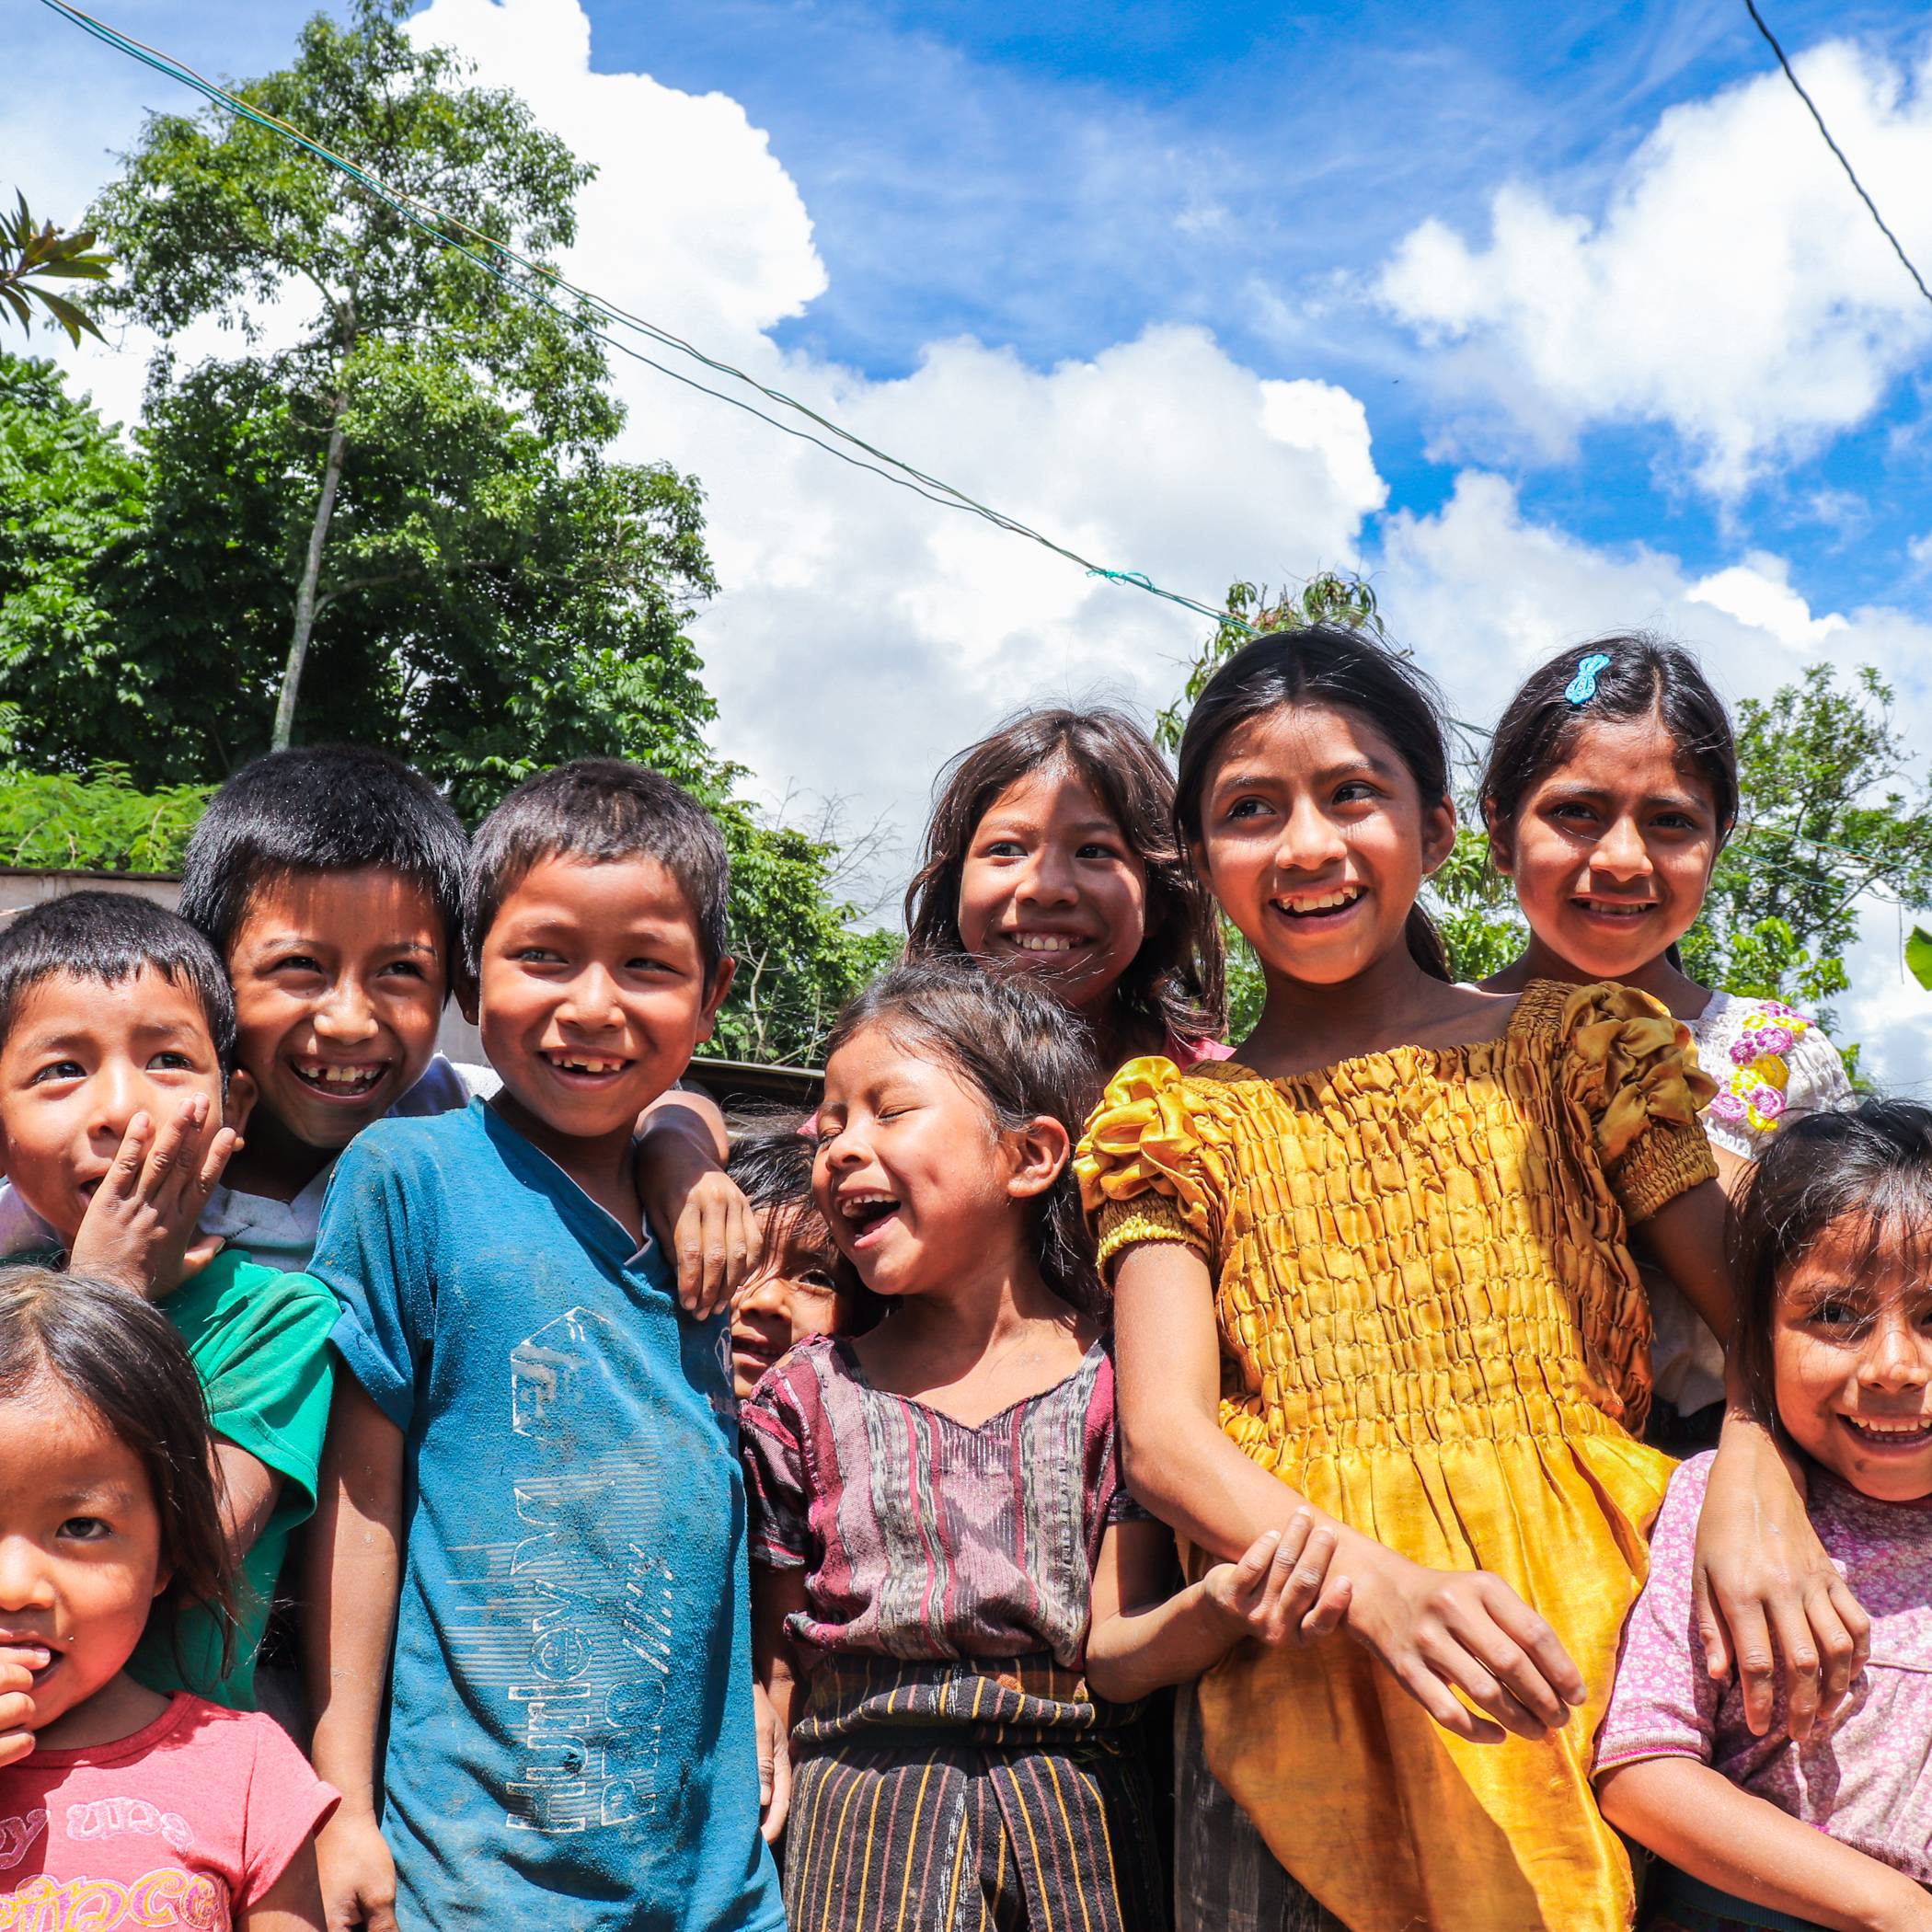 Kids in Guatemala smiling